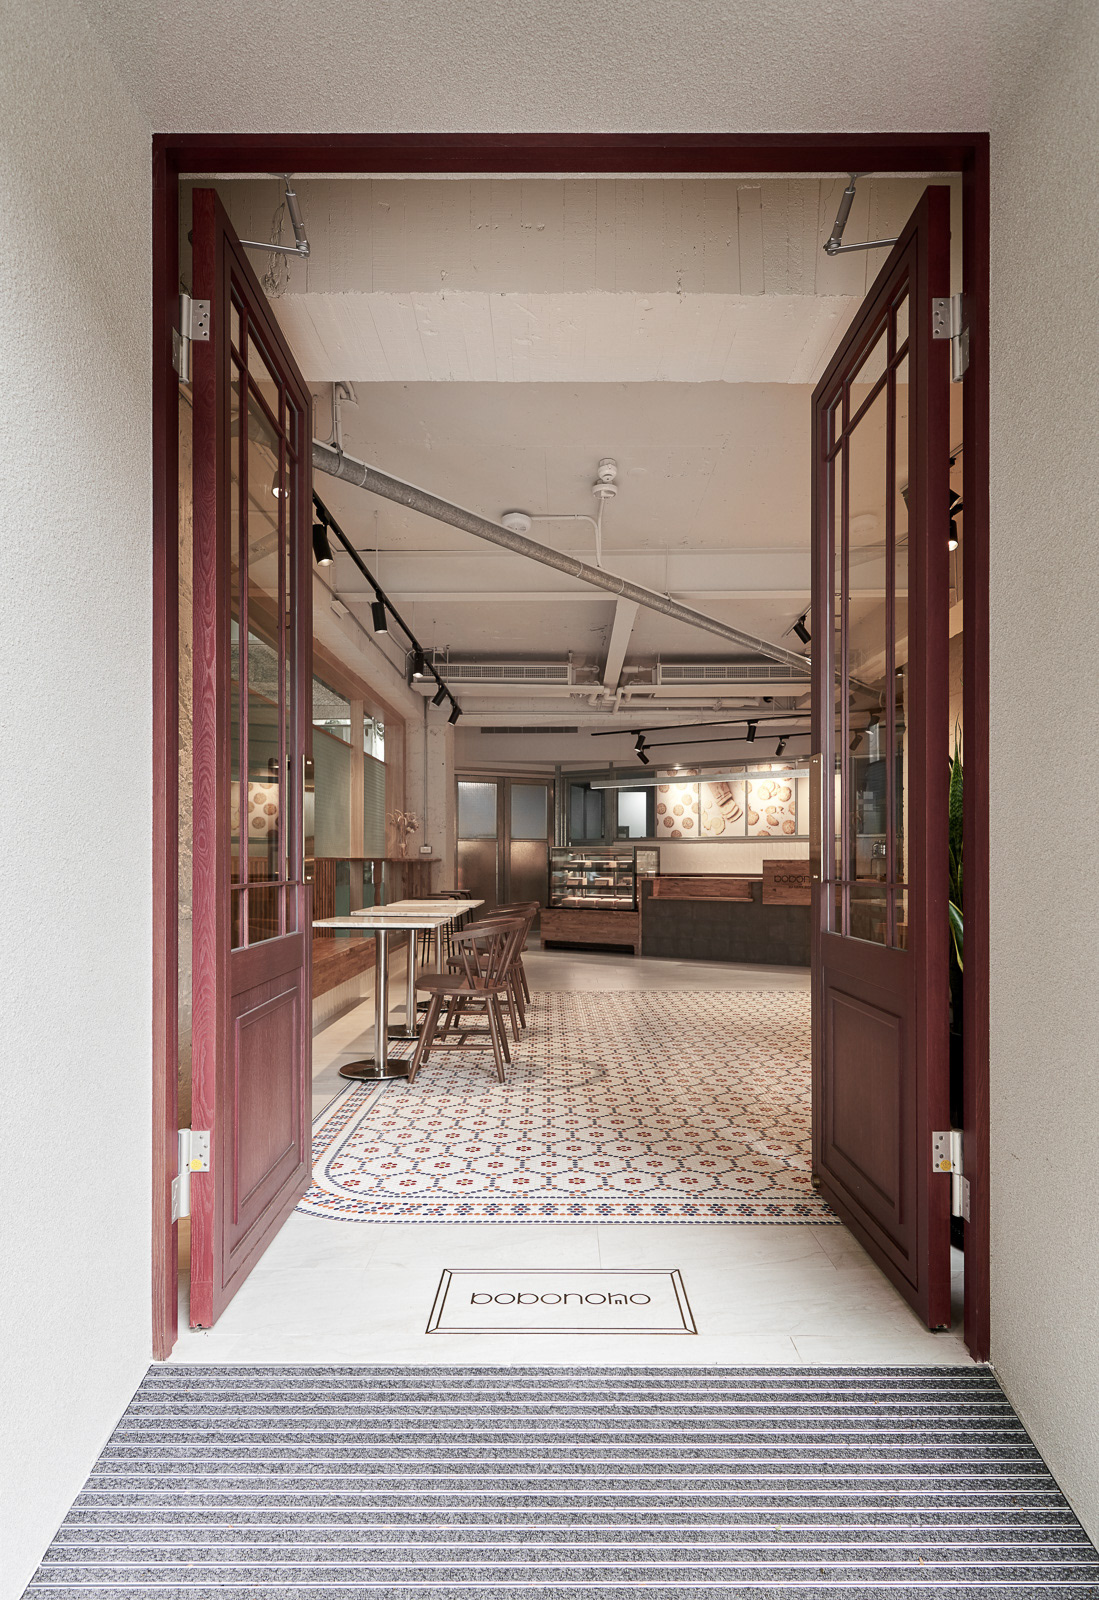 Ahead Concept Bakeryhouse heycheese interiors store bobonono Shop design taipei taiwan vintage